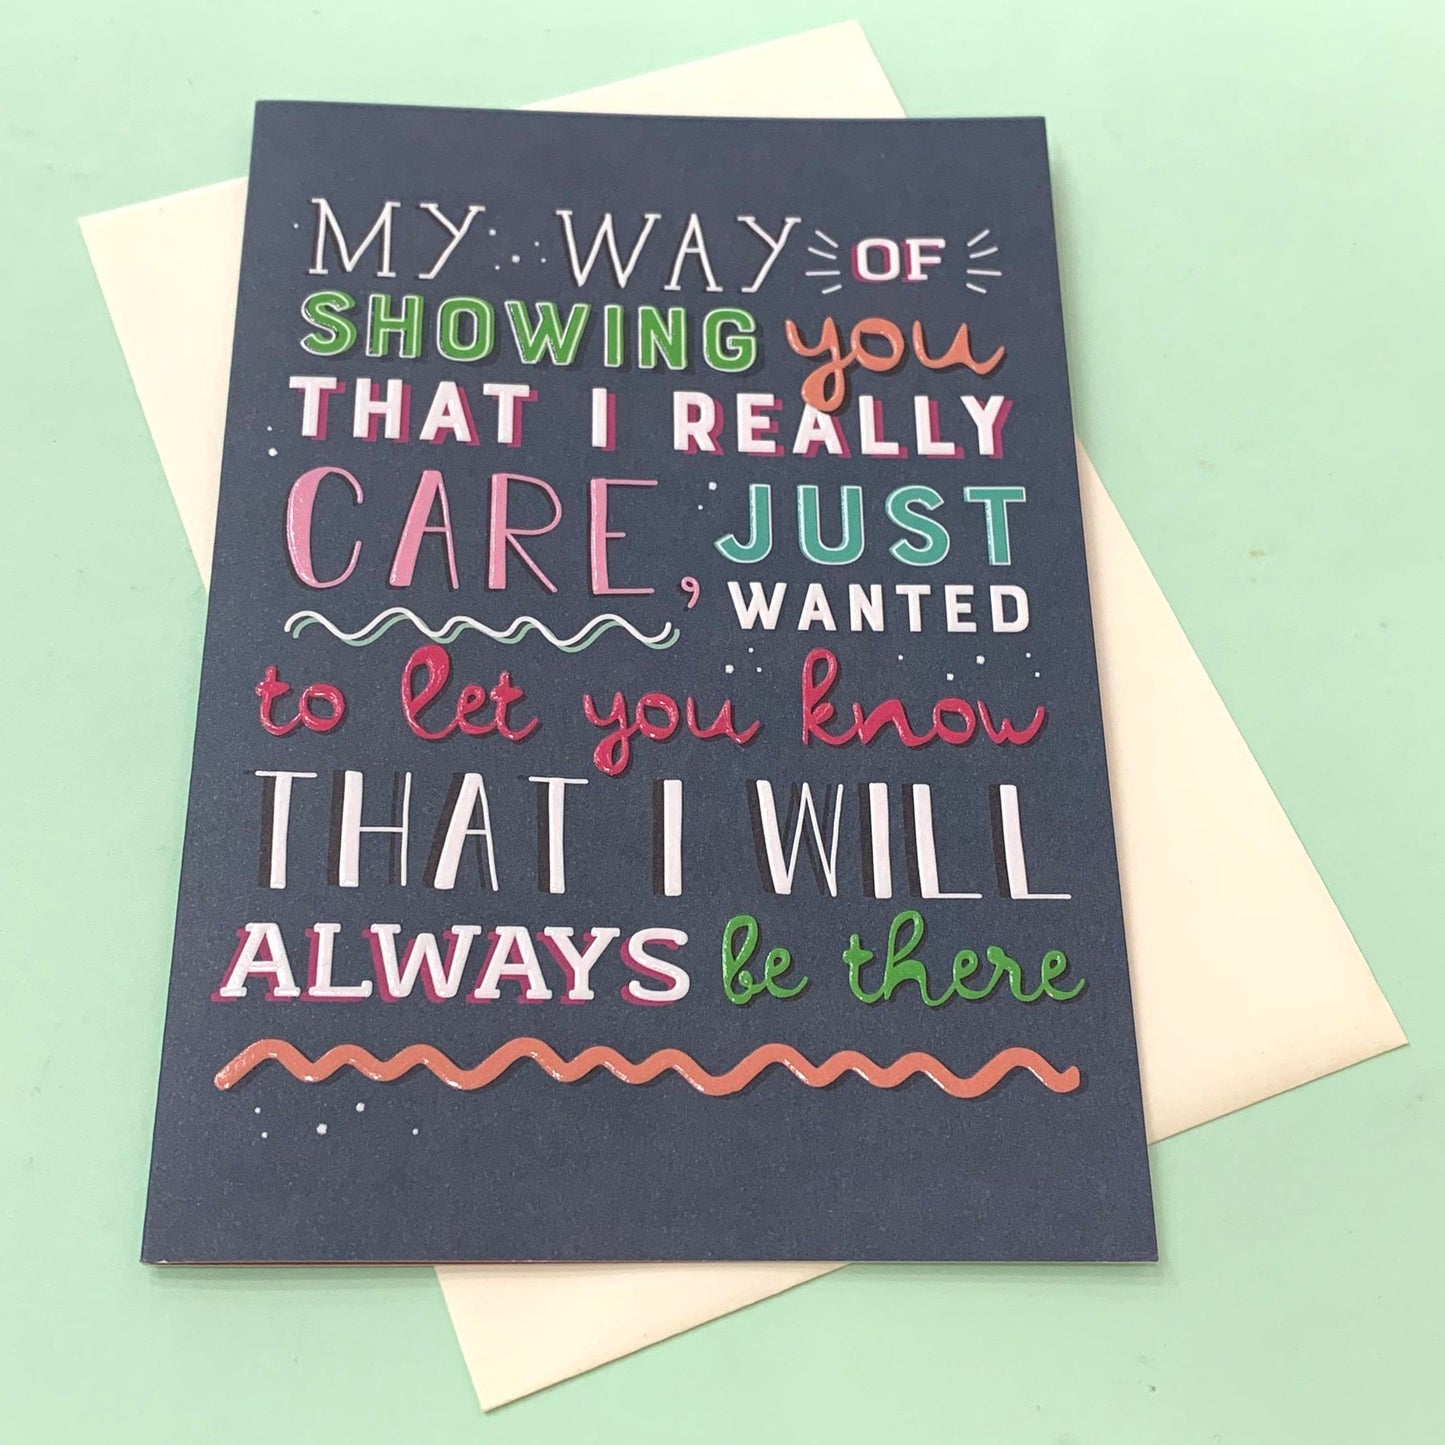 Makin' Whoopee - "I Really Care" Card